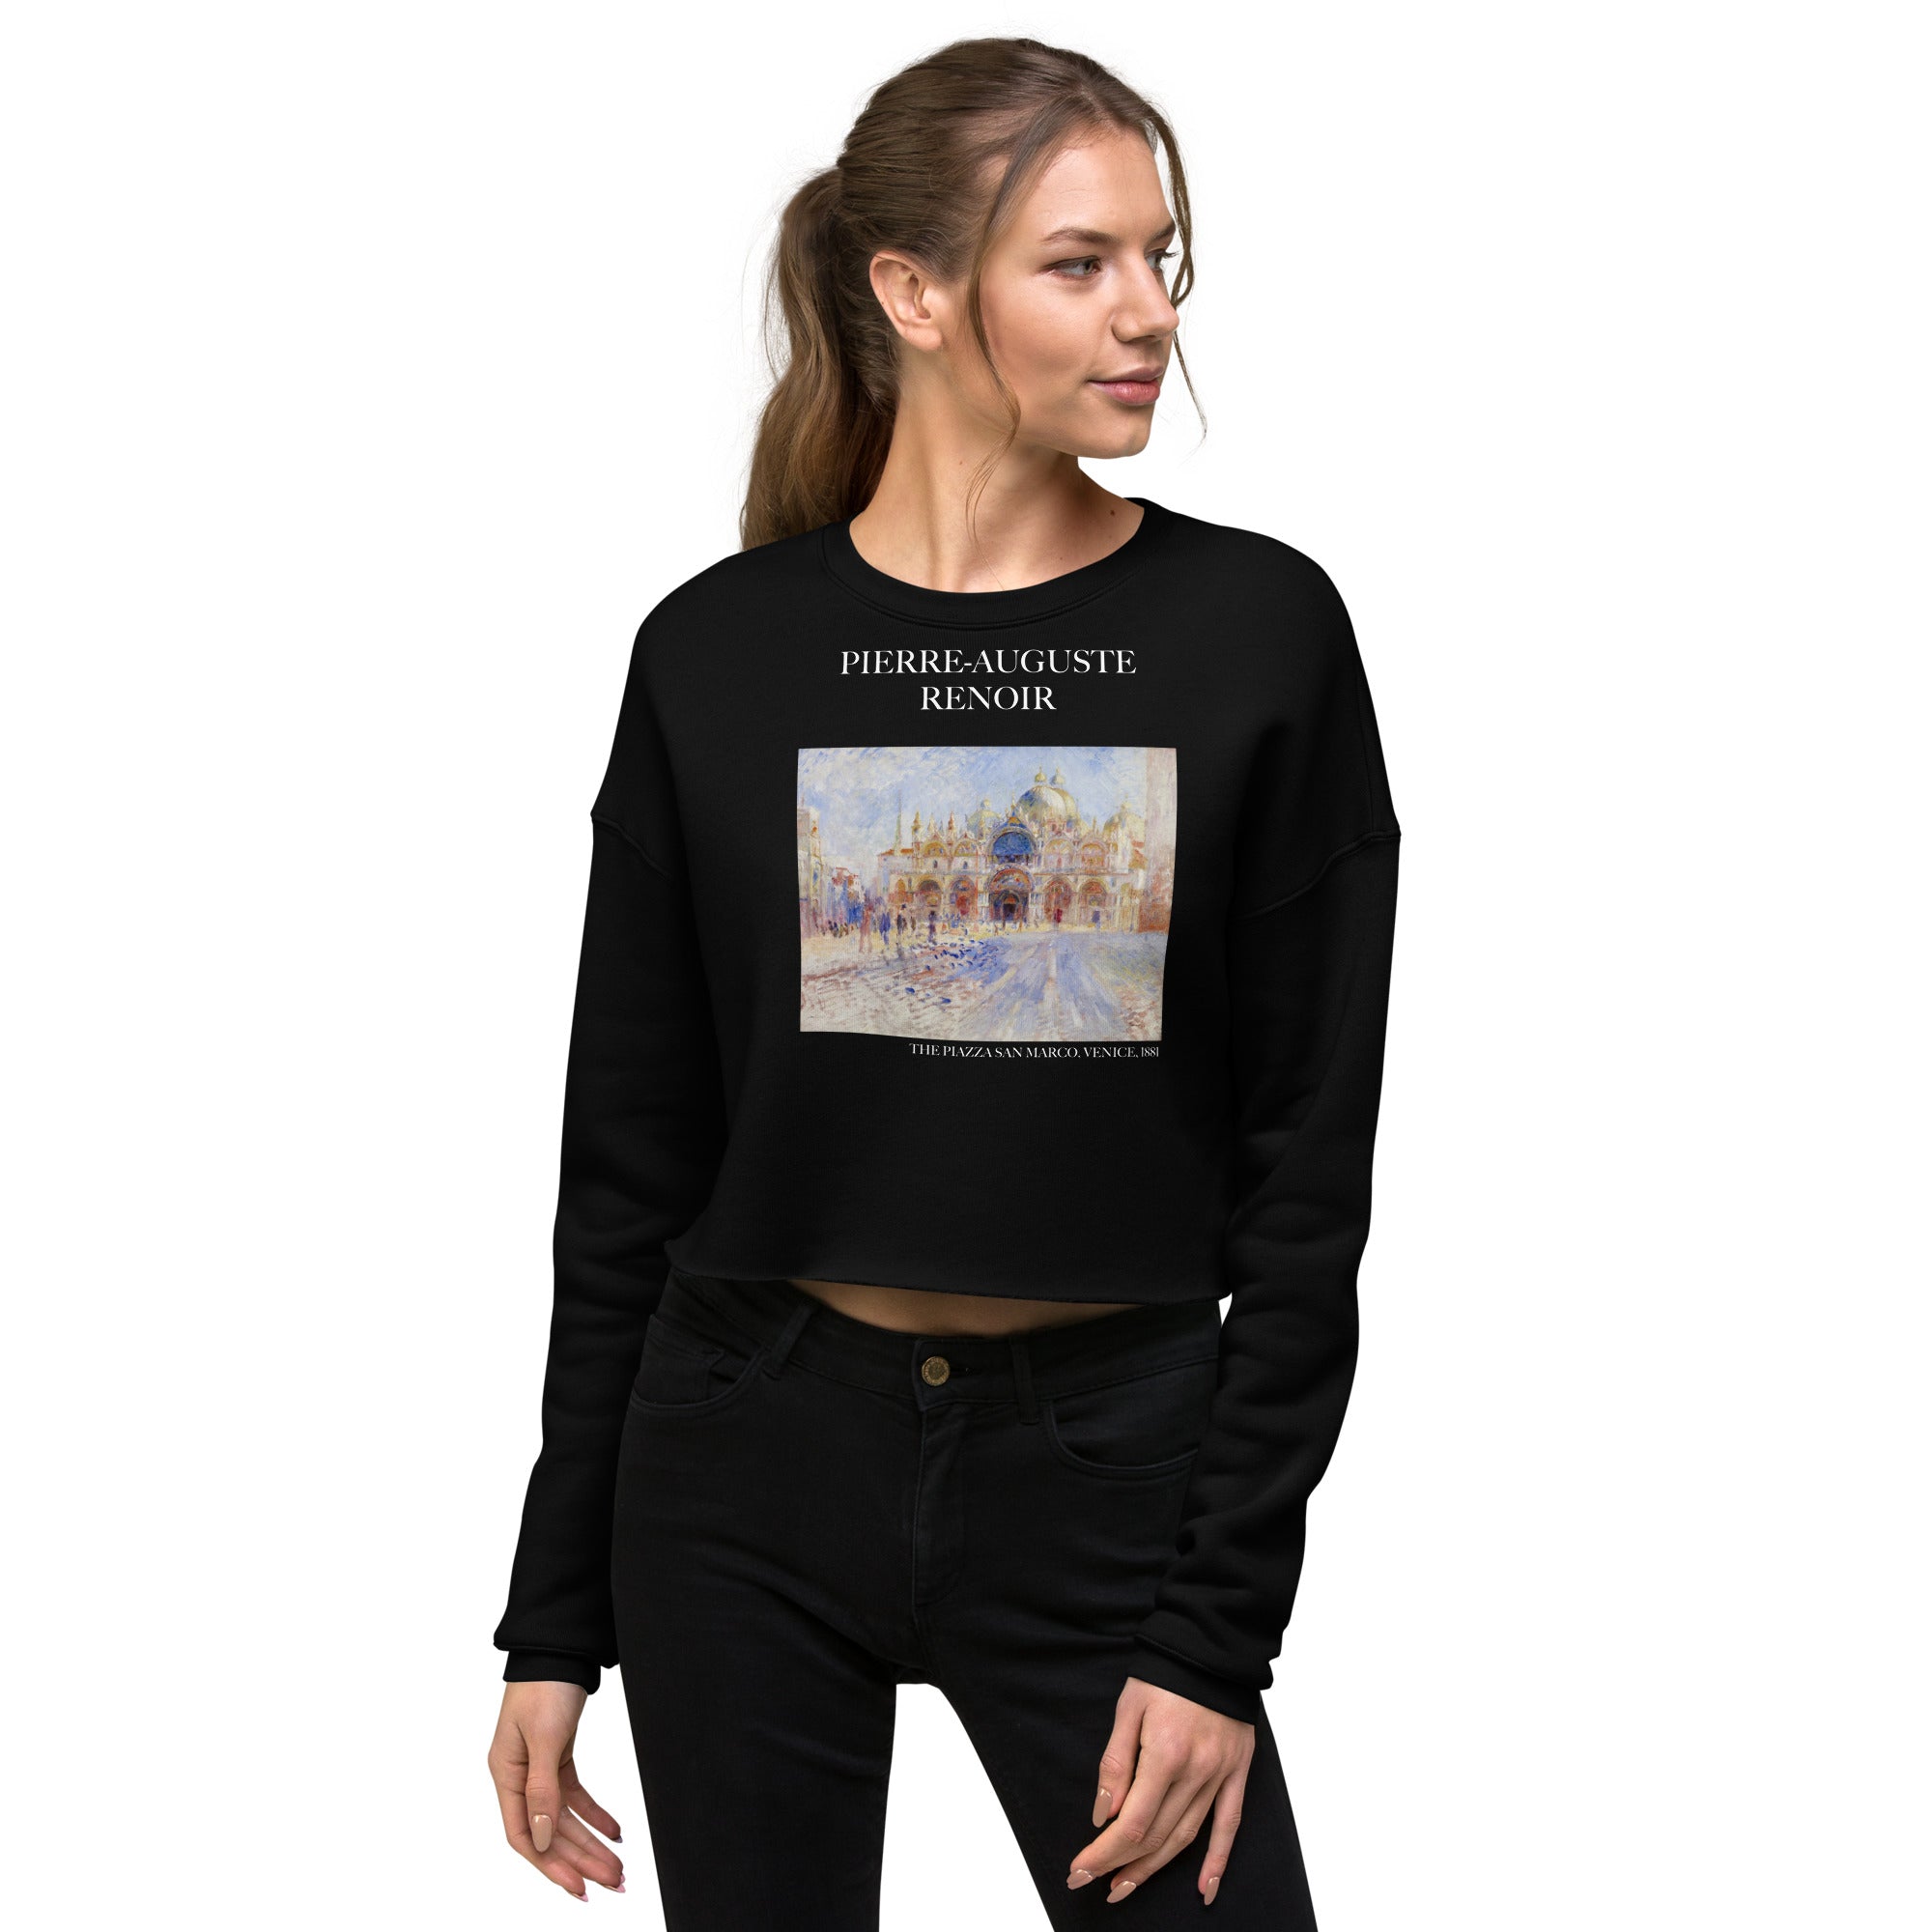 Pierre-Auguste Renoir 'The Piazza San Marco, Venice' Famous Painting Cropped Sweatshirt | Premium Art Cropped Sweatshirt